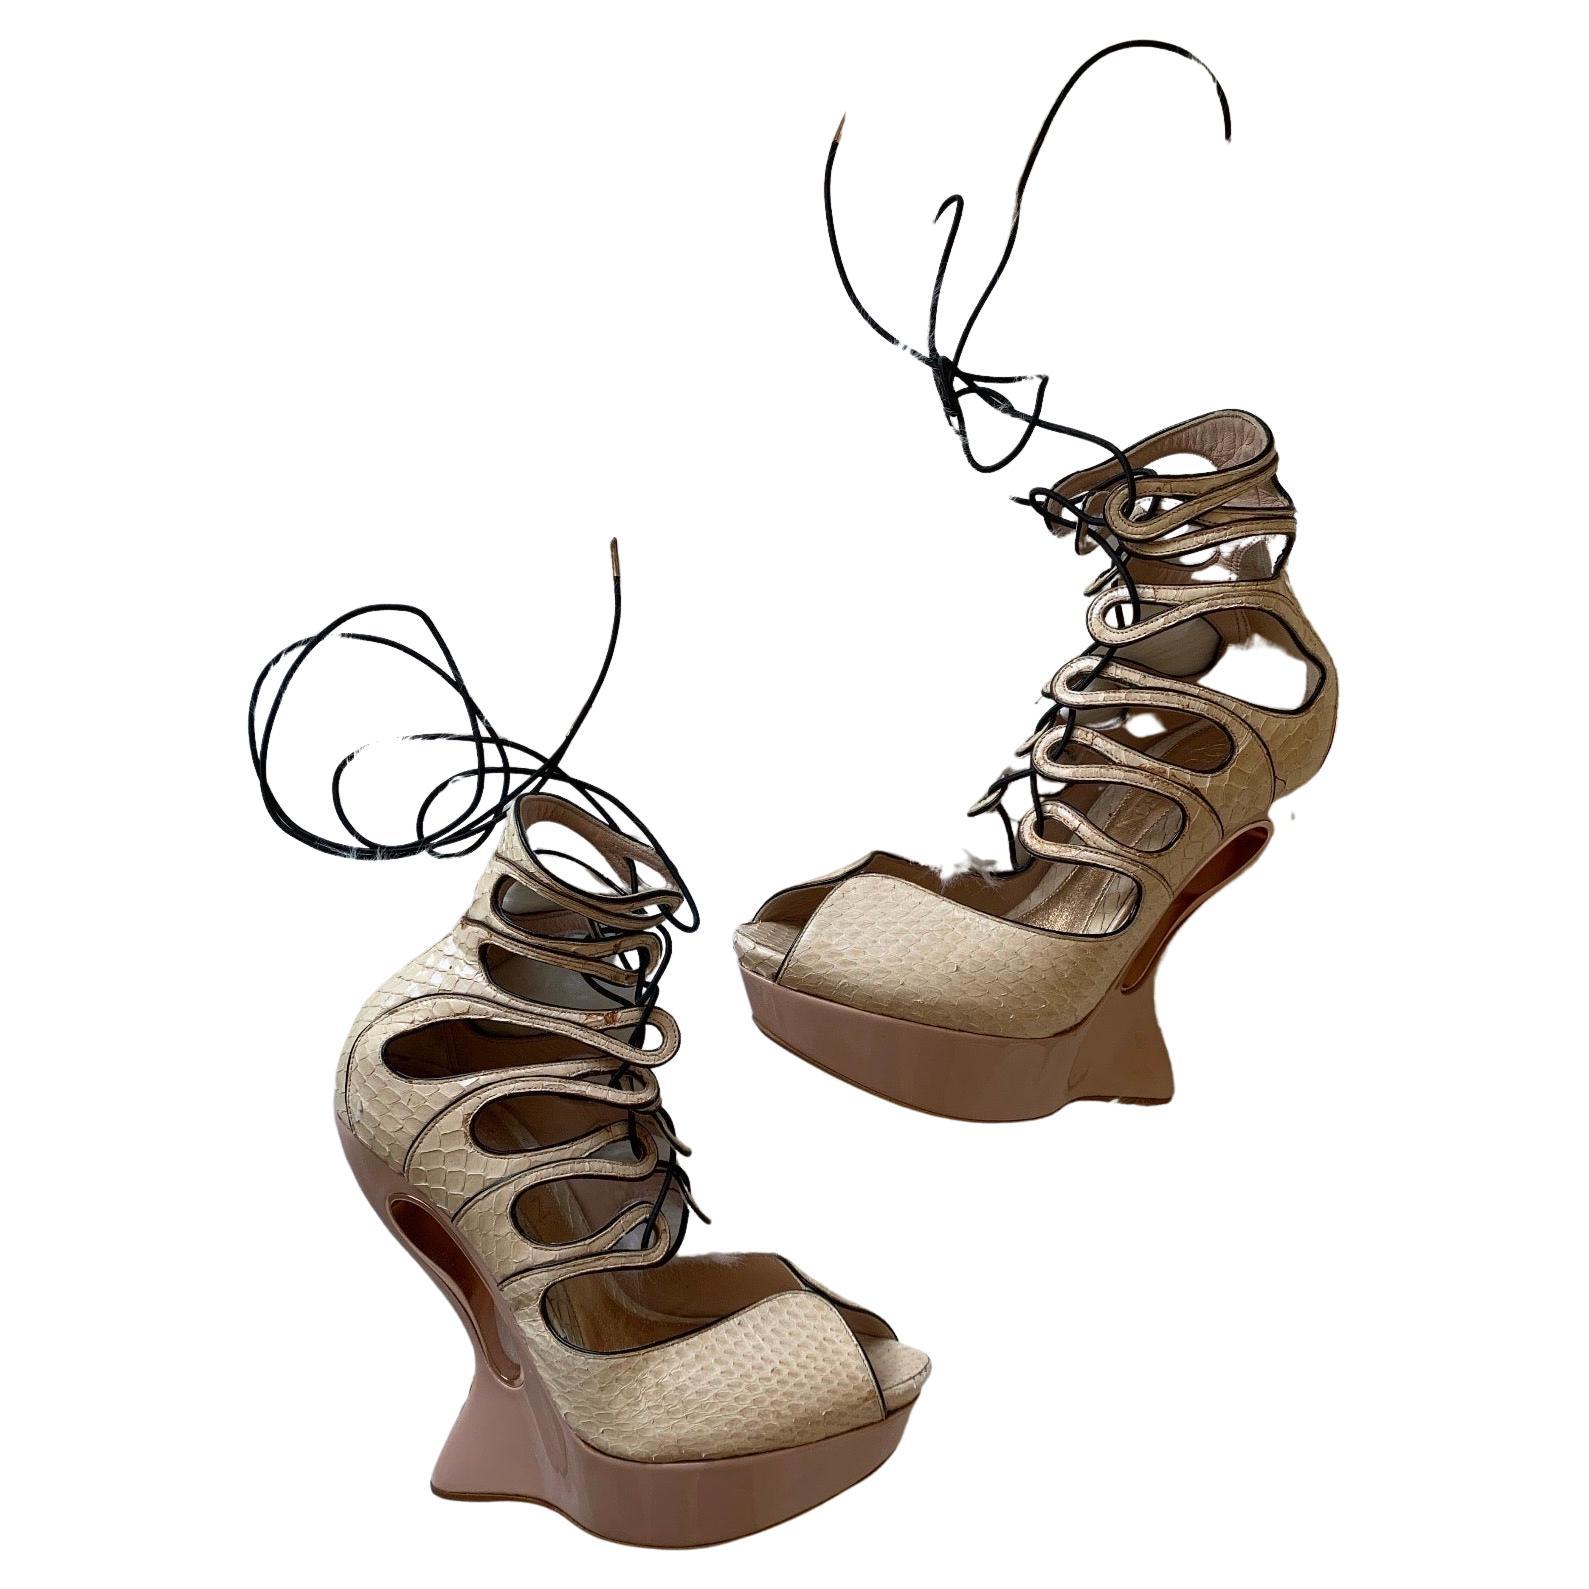 Alexander McQueen Spring 2012 sculptural snakeskin heels Size 7 For Sale